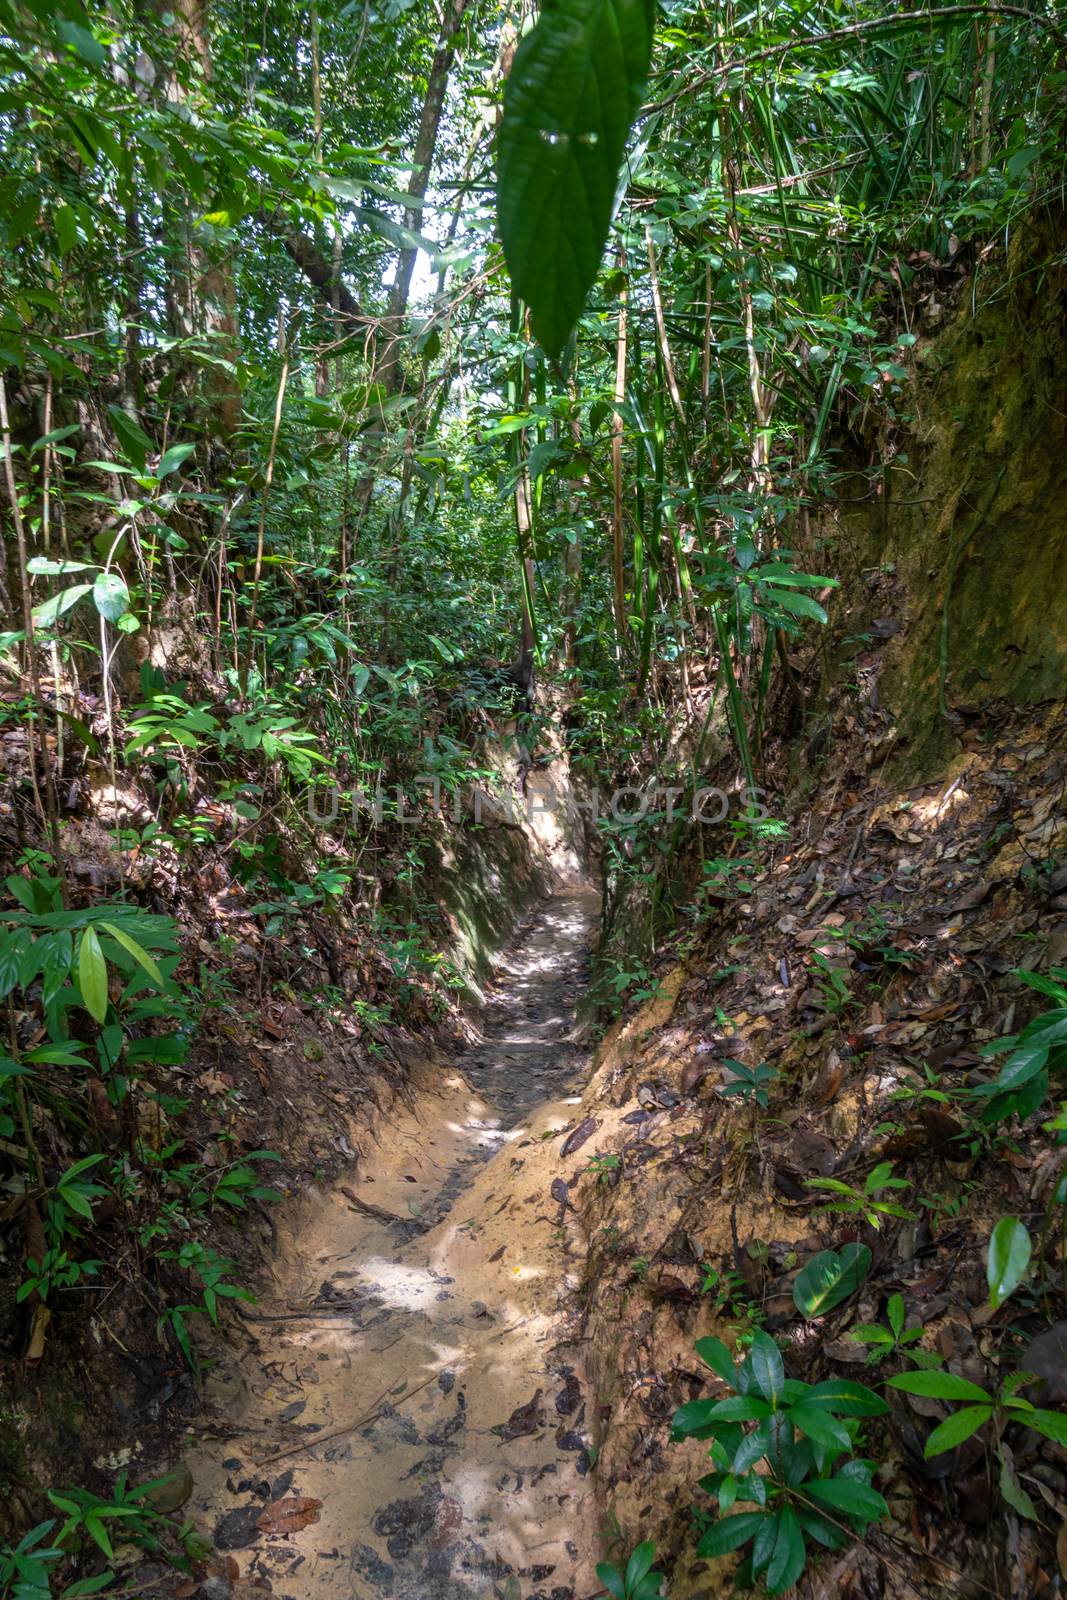 Penang National Park hiking path cutting deep through the muddy